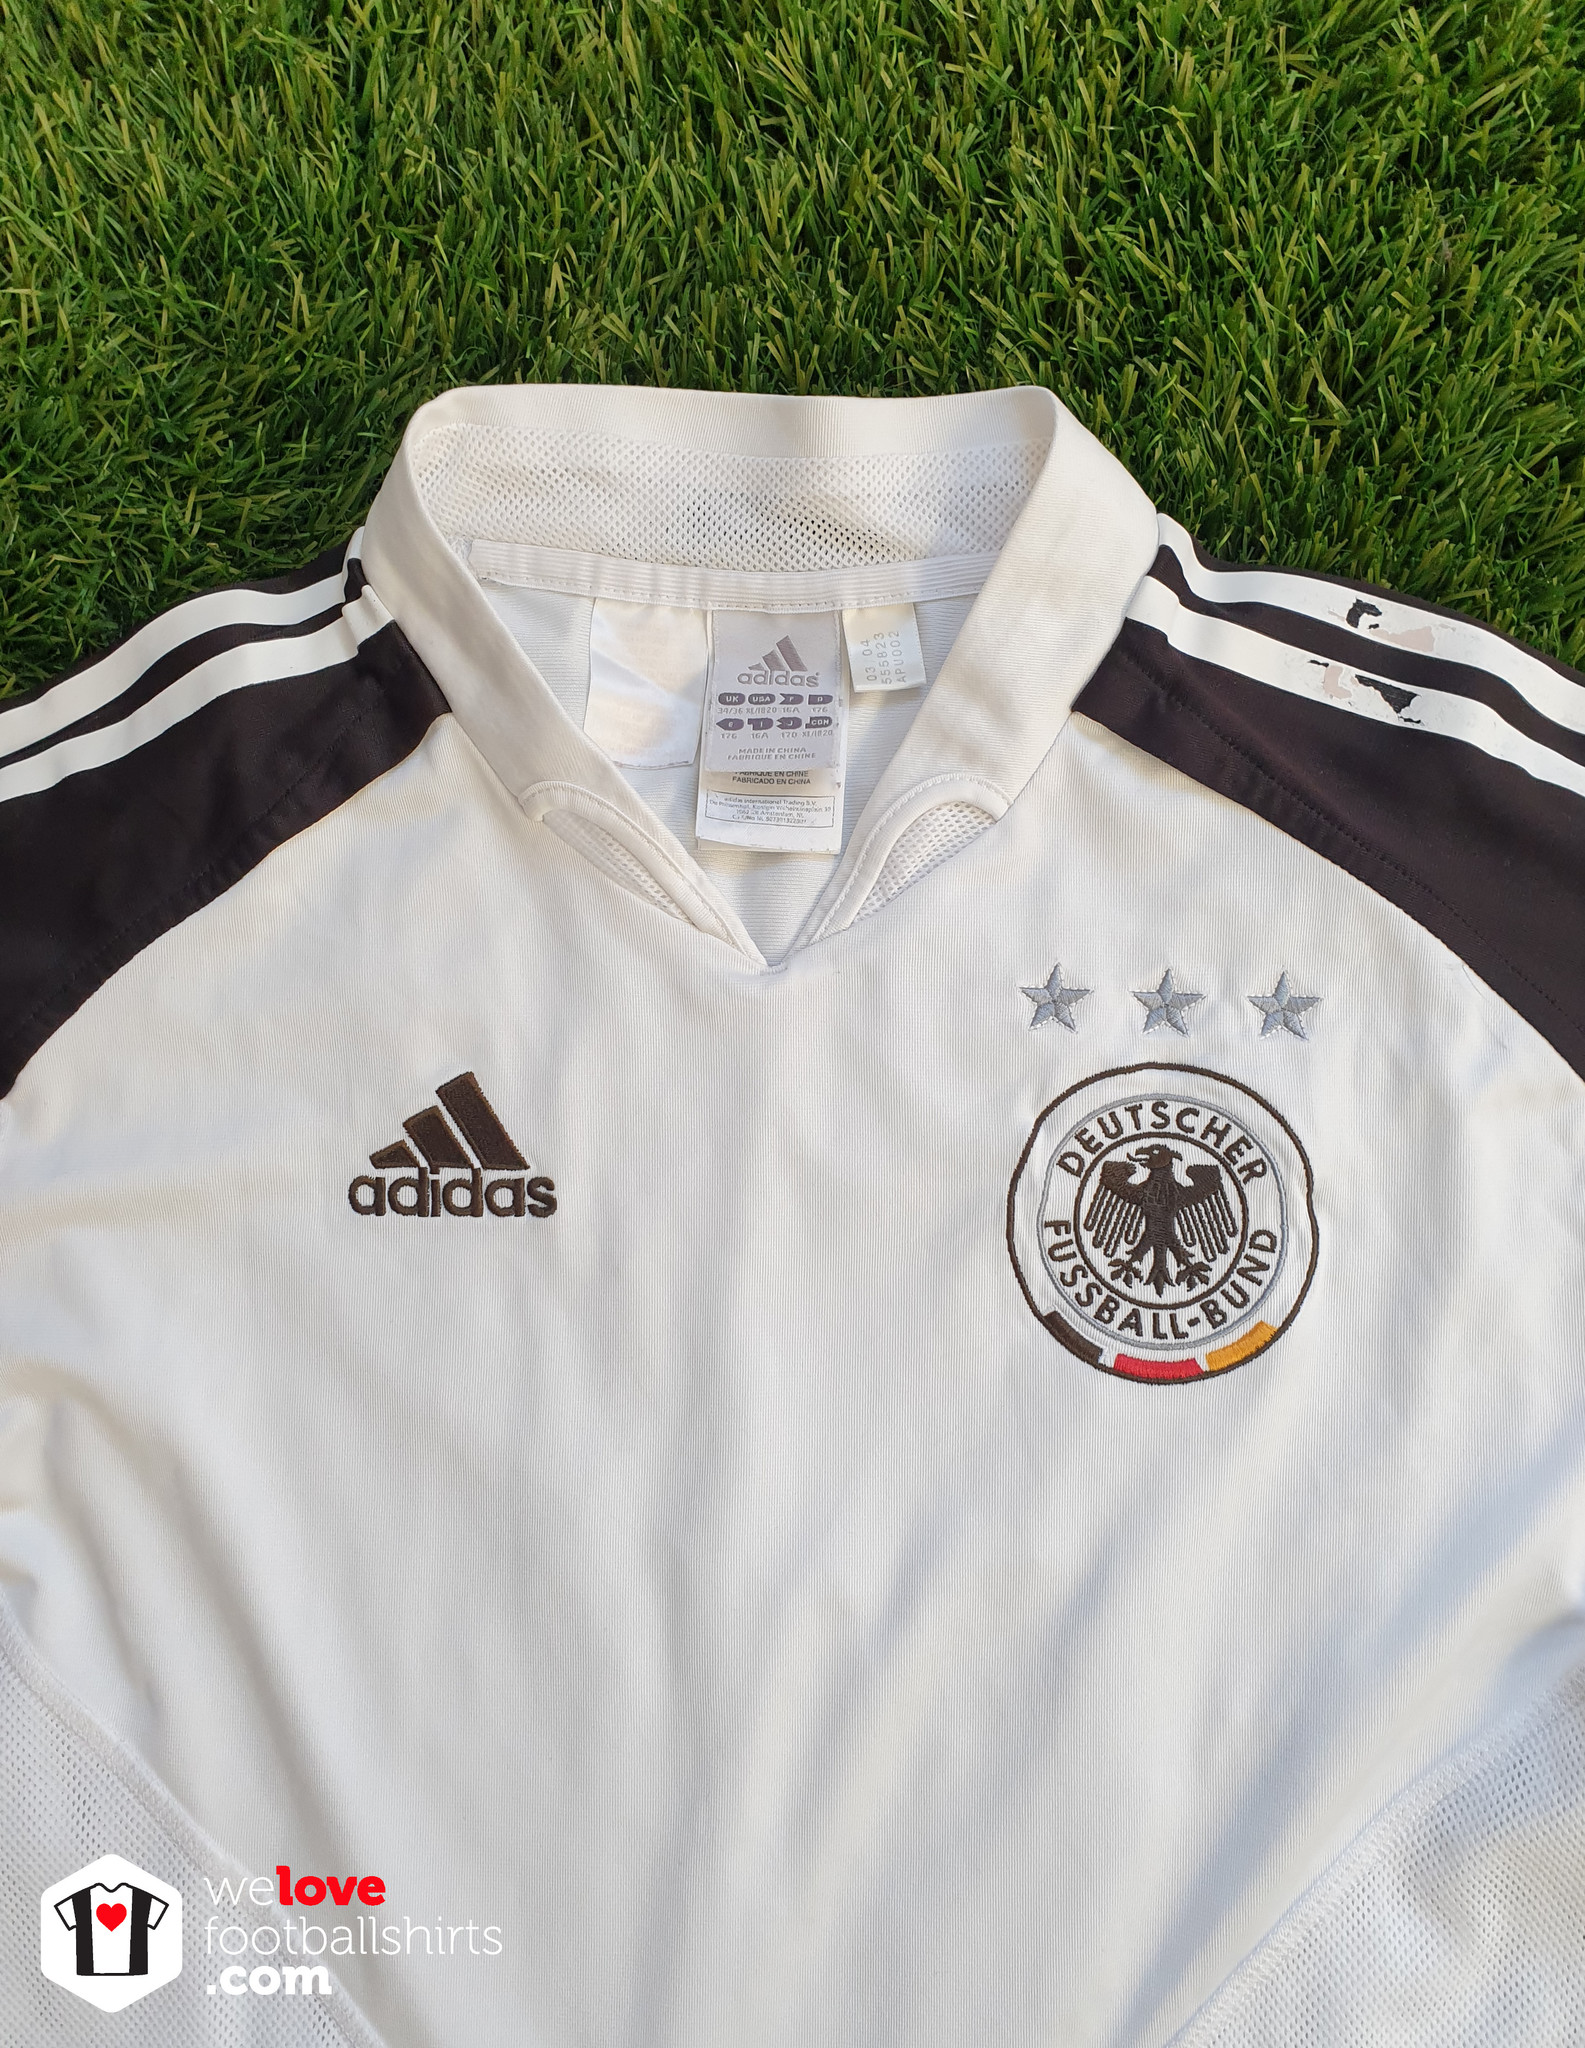 Volverse Ubicación proteger Adidas football shirt Germany EURO 2004 - Welovefootballshirts.com